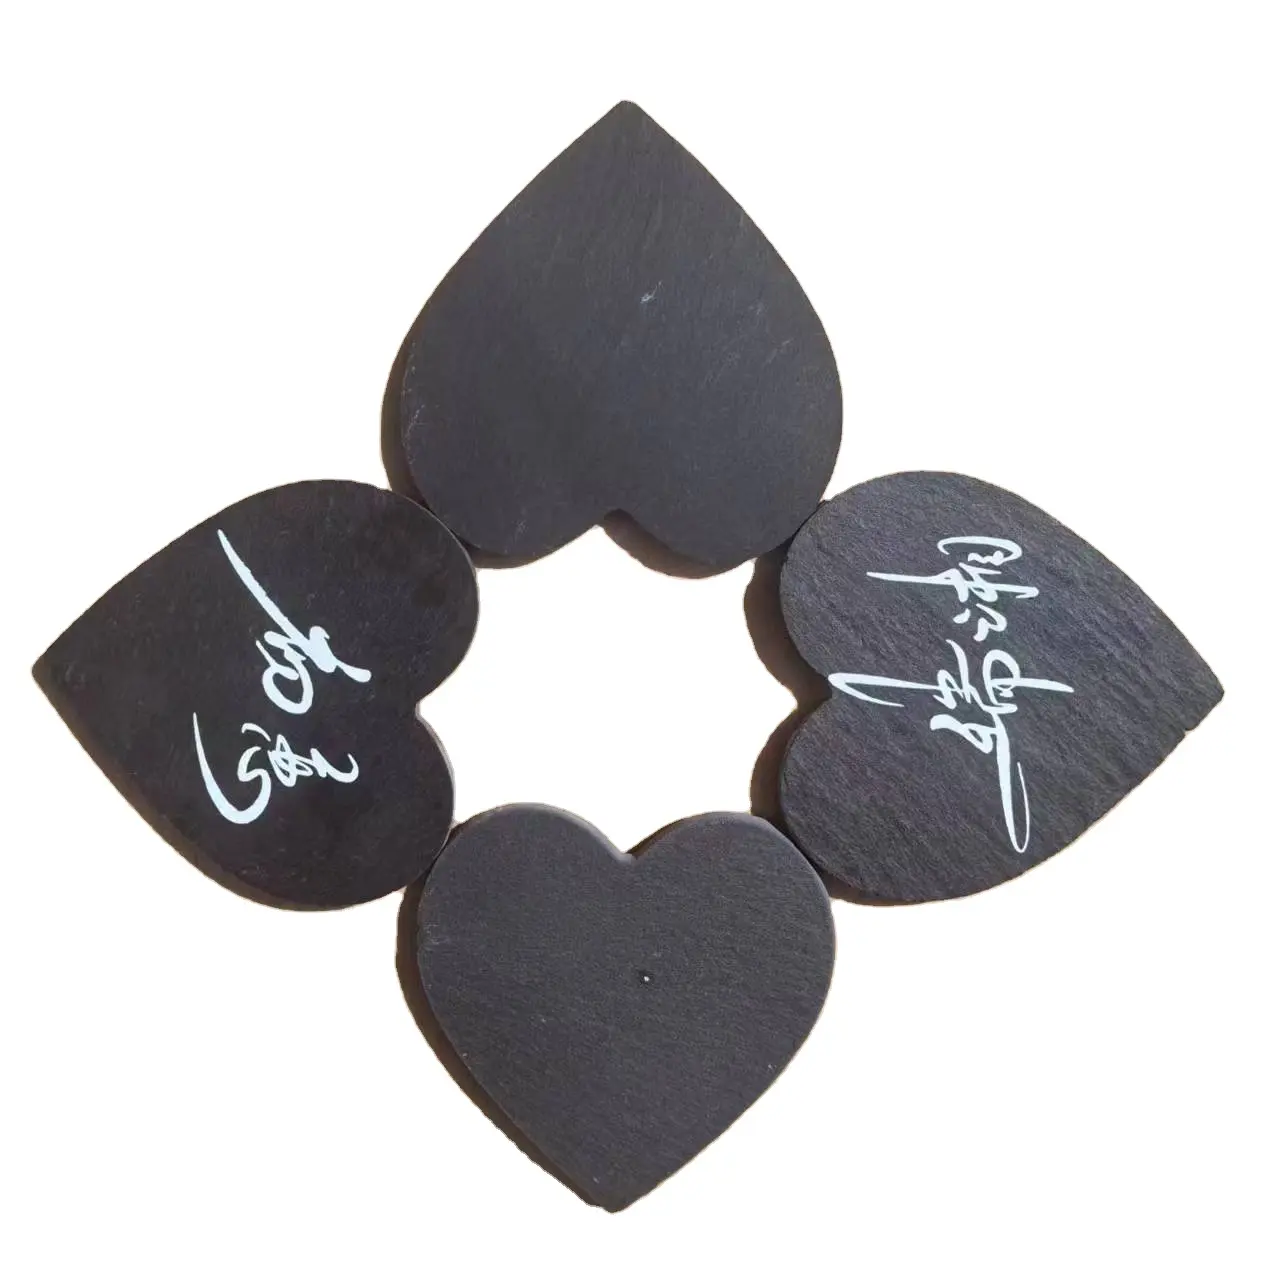 Резной мрамор в форме сердца, размер 10*10*0,8 см, логотип на заказ, гравировка камня